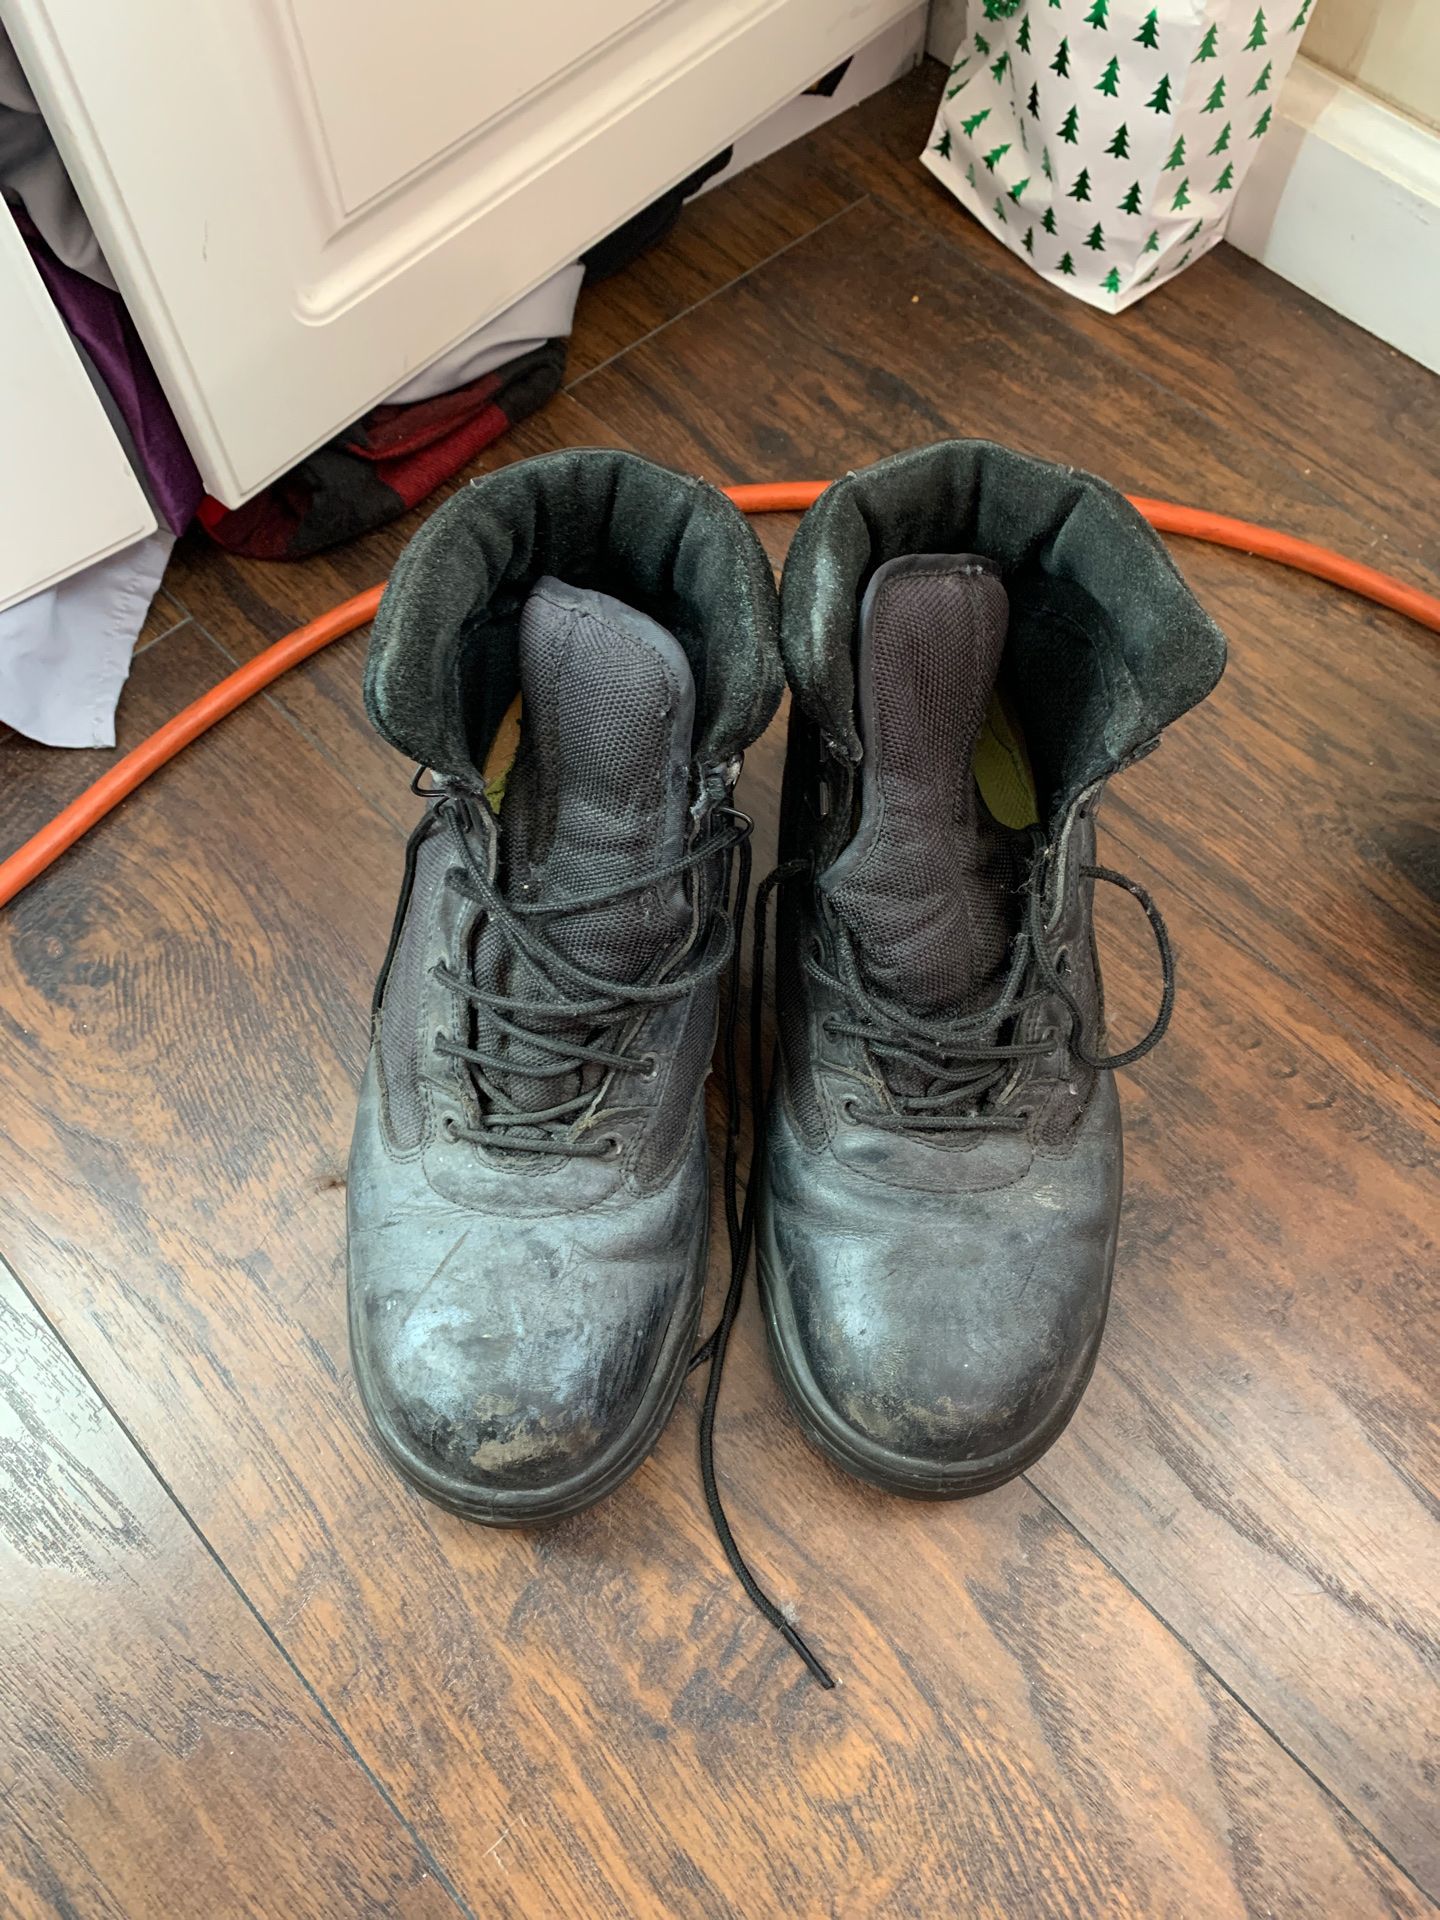 Work zone steel toe boots 10.5